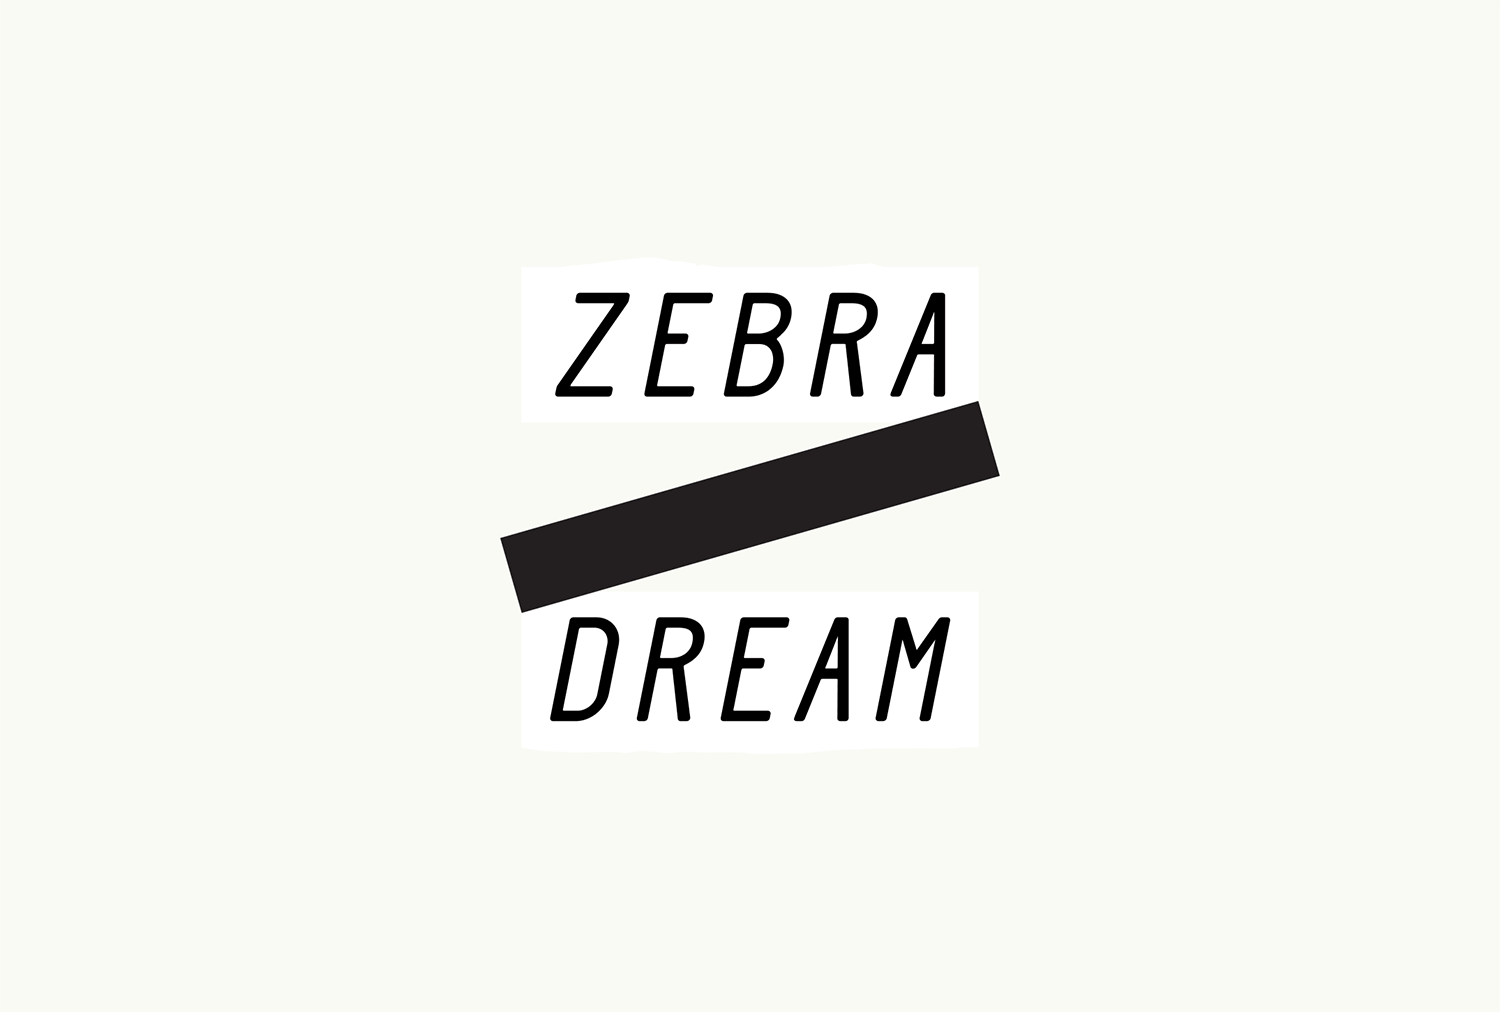 Zebra Company Logo - New Logo Design & Packaging for Zebra Dream